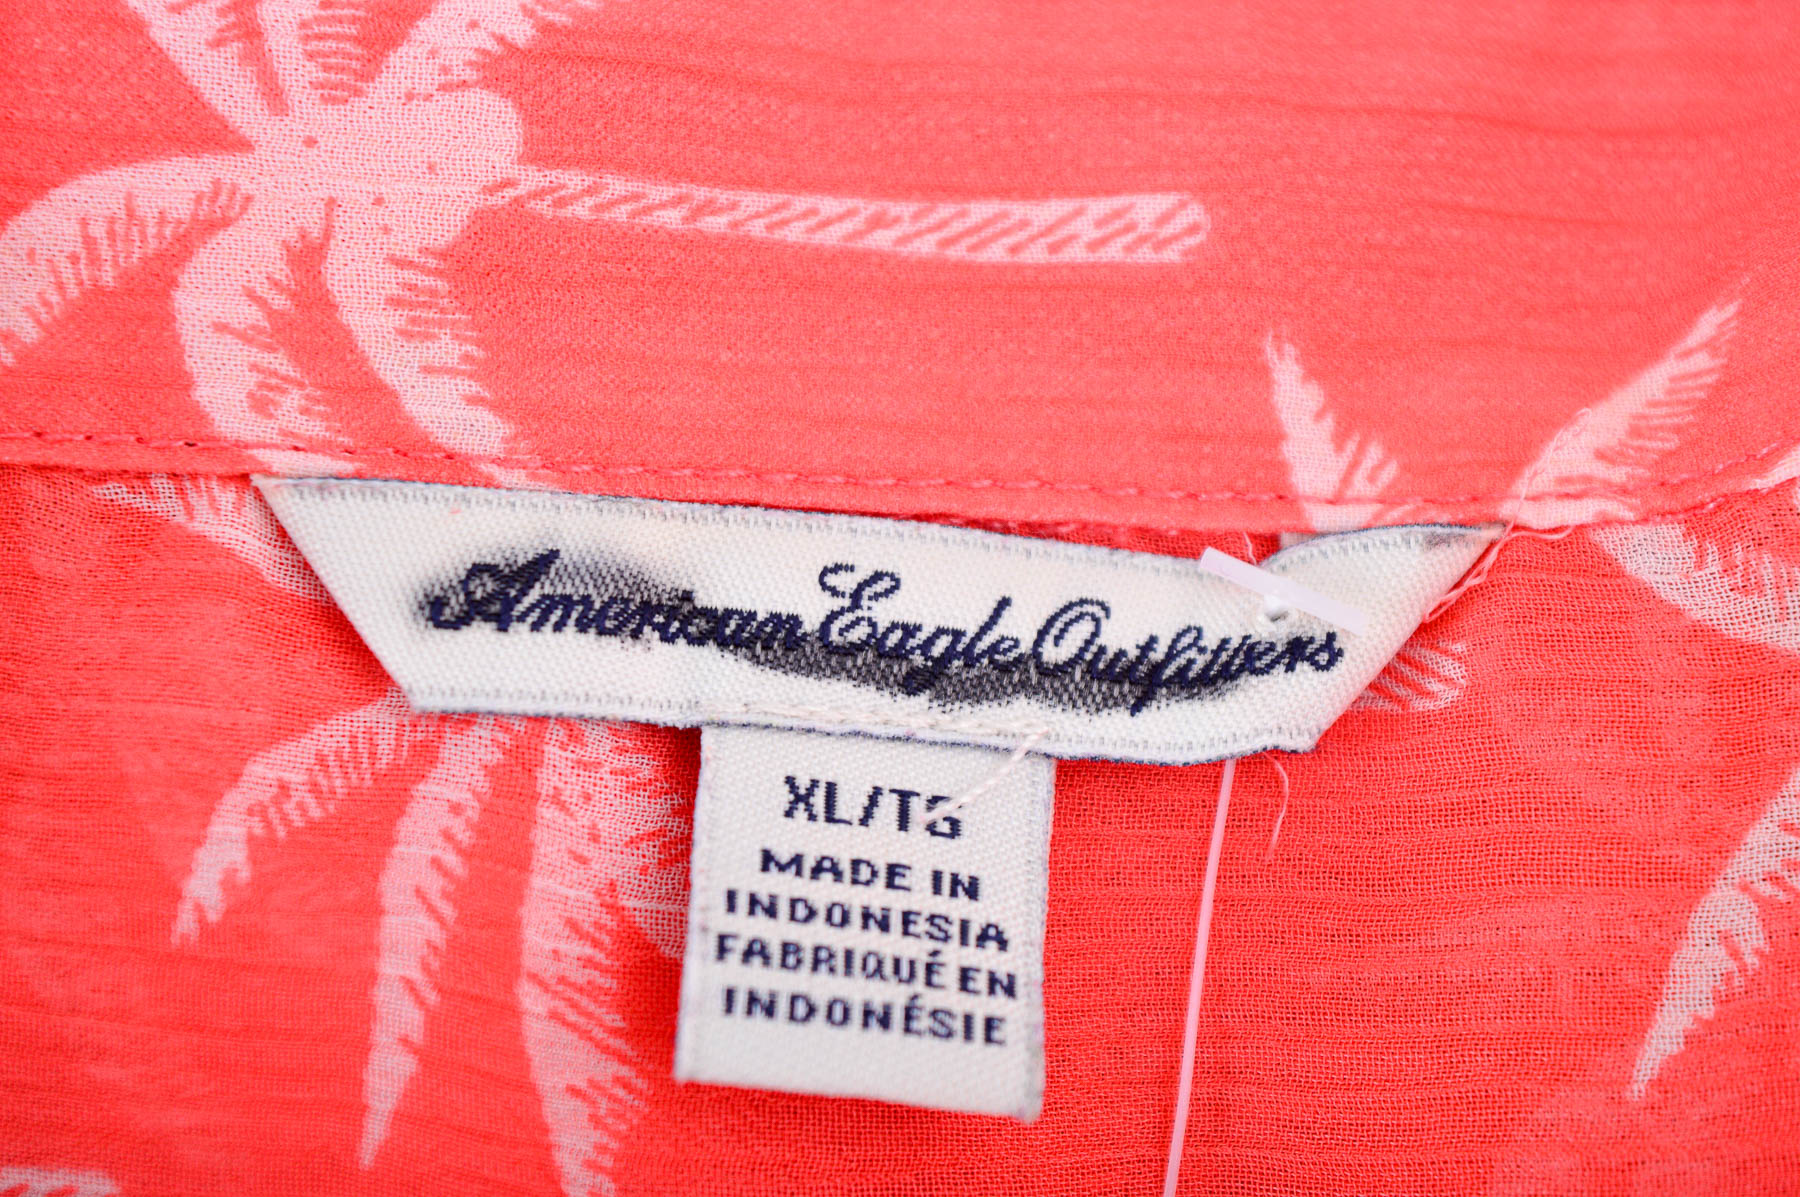 Women's shirt - American Eagle - 2